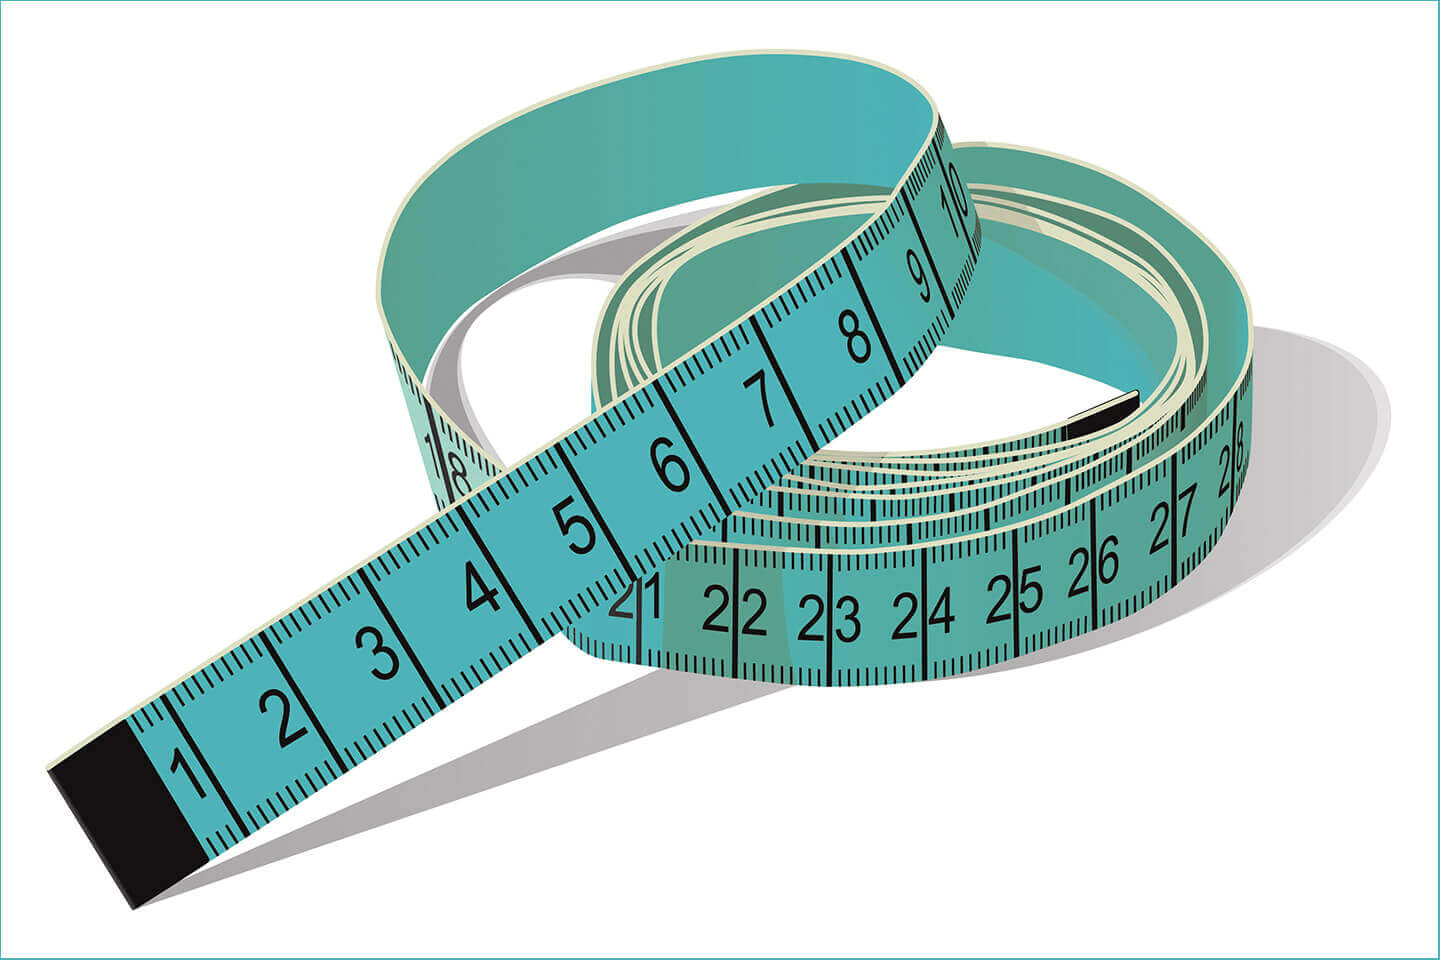 Six Performance Measurement Fundamentals